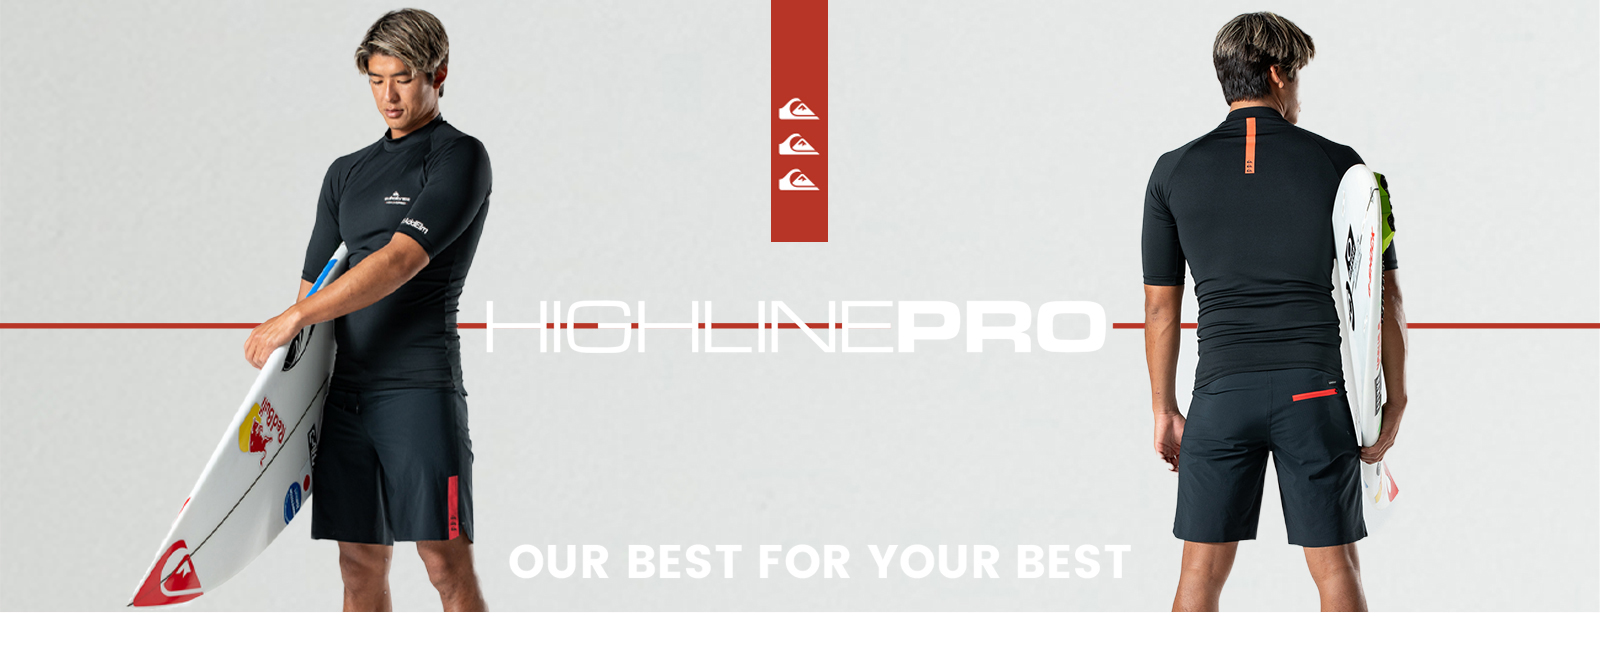 Addelm & Highline Pro